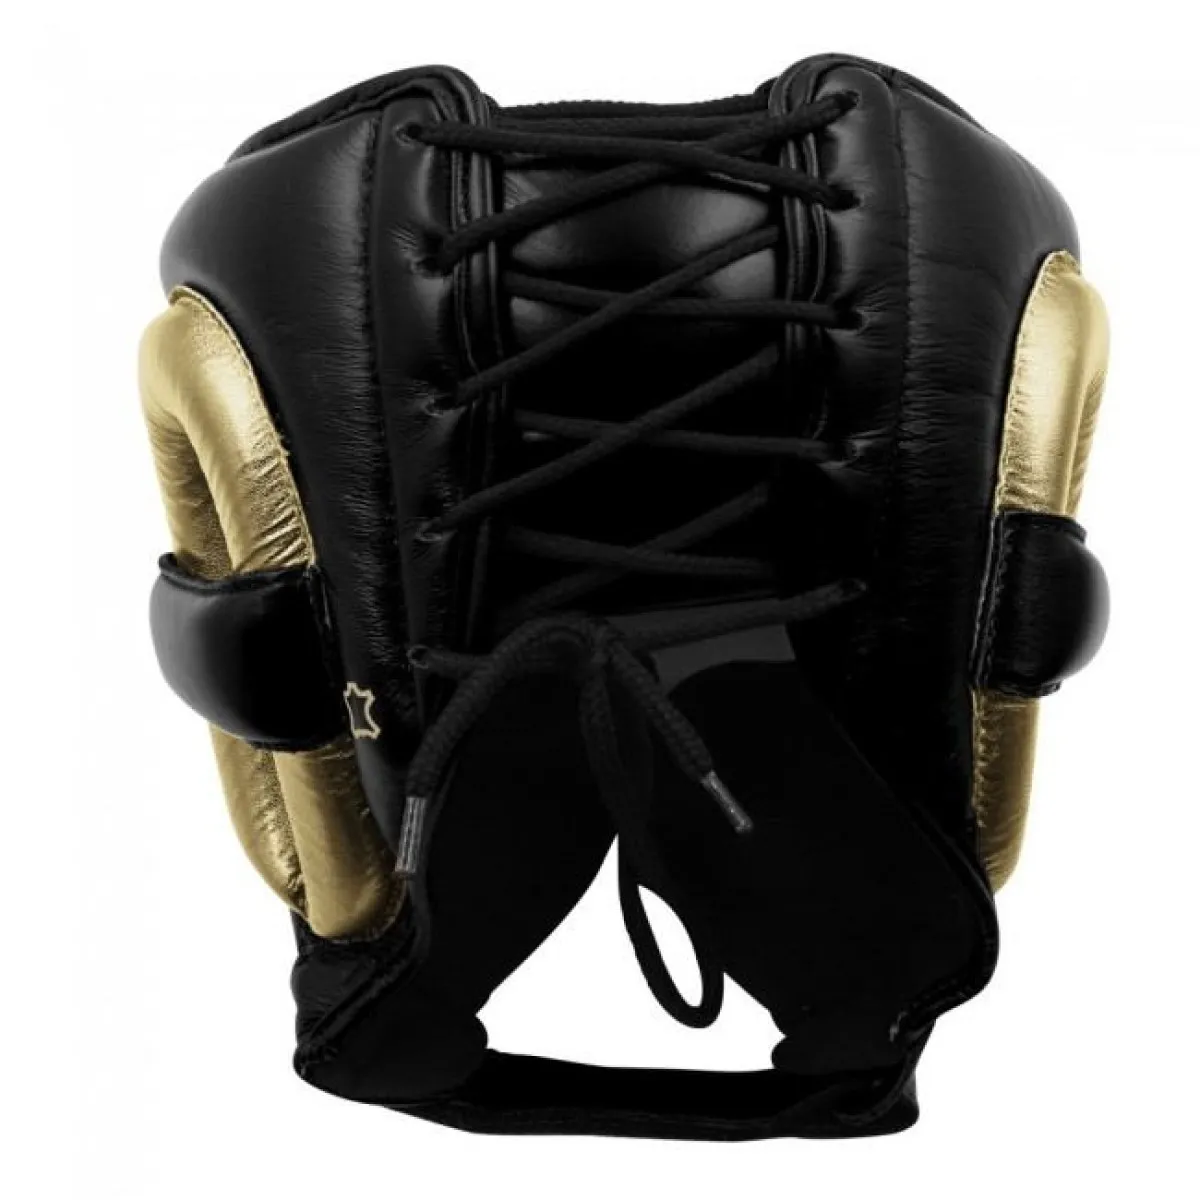 adidas head protection adistar Pro black|gold